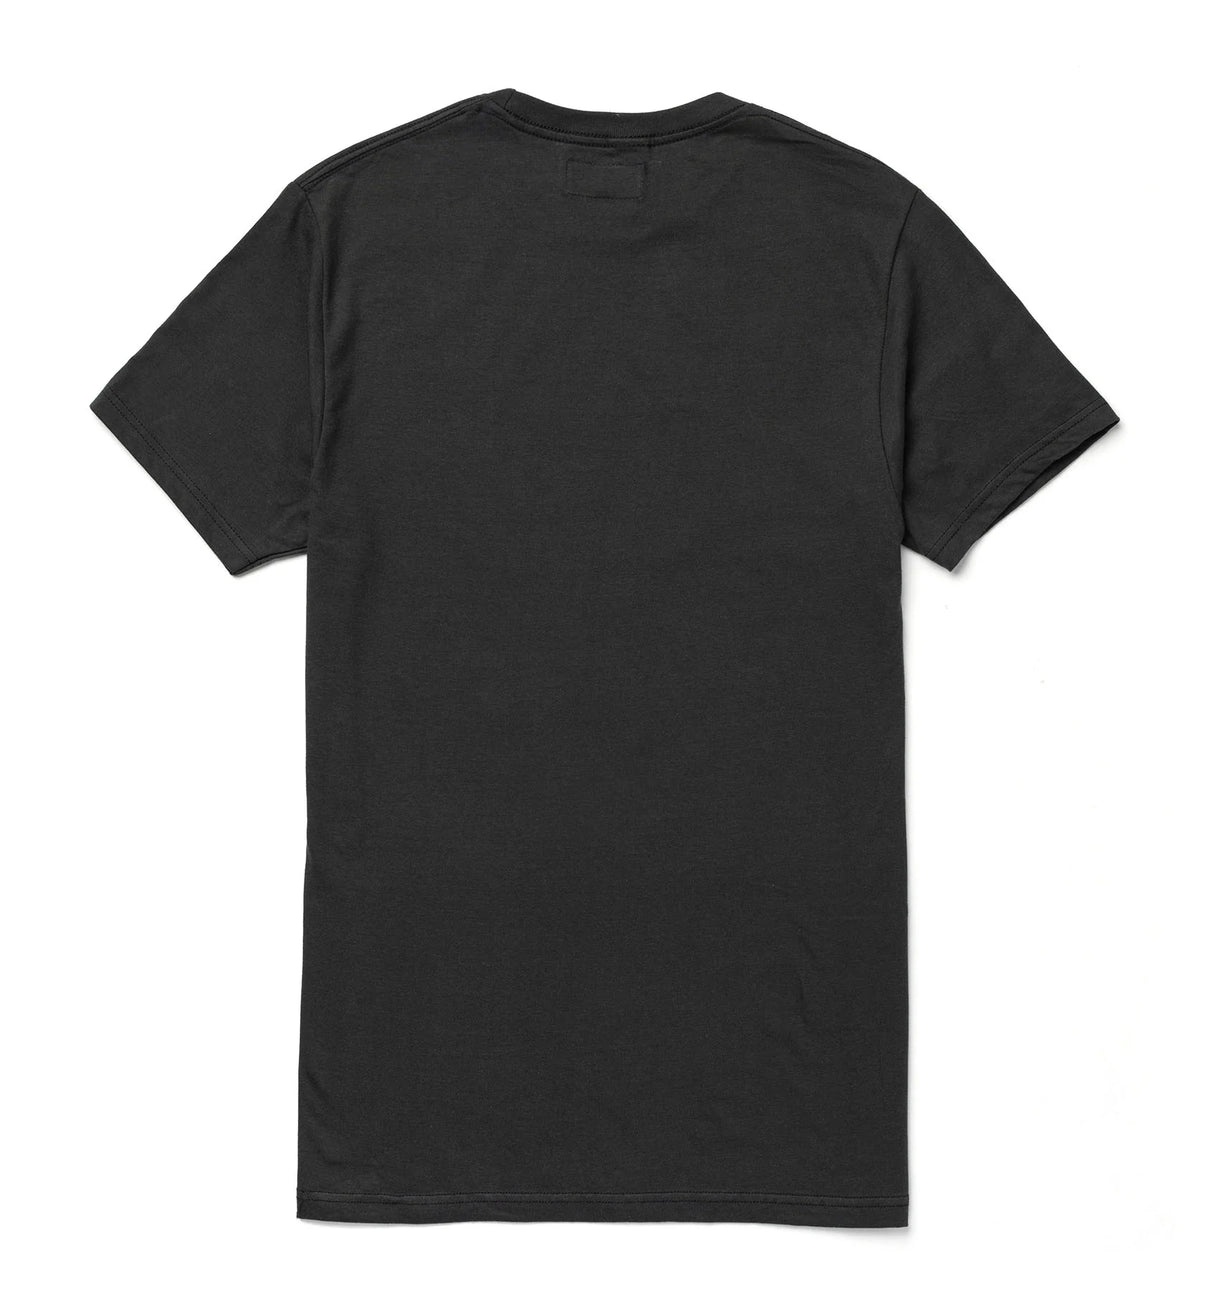 Seager x Waylon Jennings Eagle Vintage Black S/s Shirt